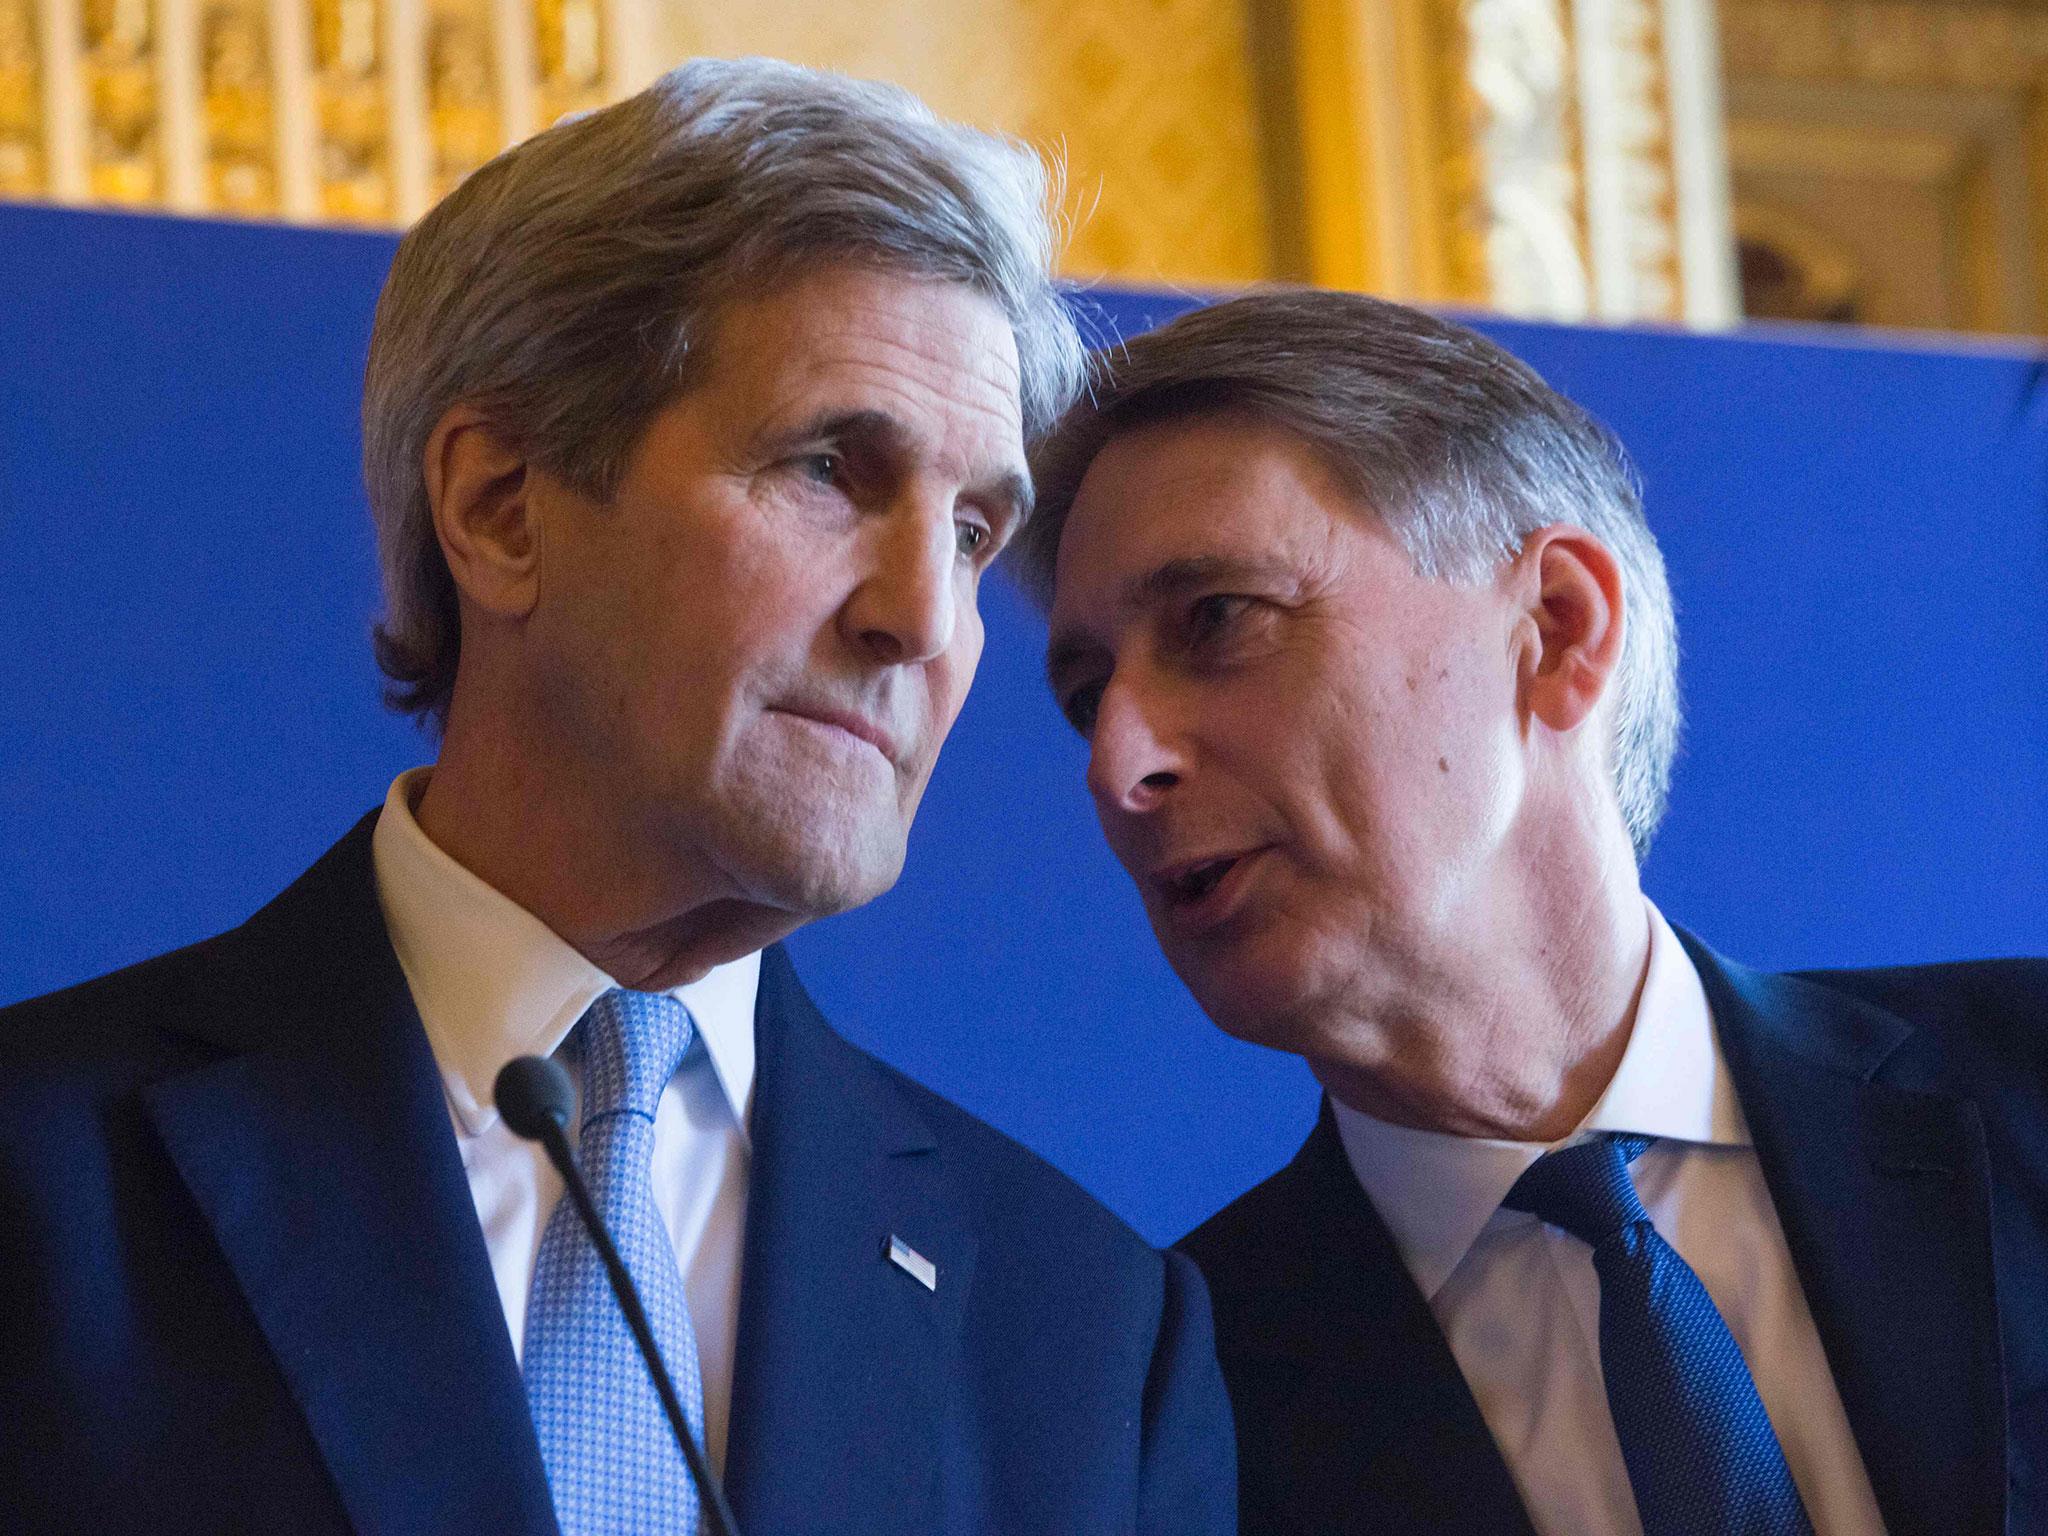 The US Secretary of State, John Kerry, left, and the British Foreign Secretary, Philip Hammond